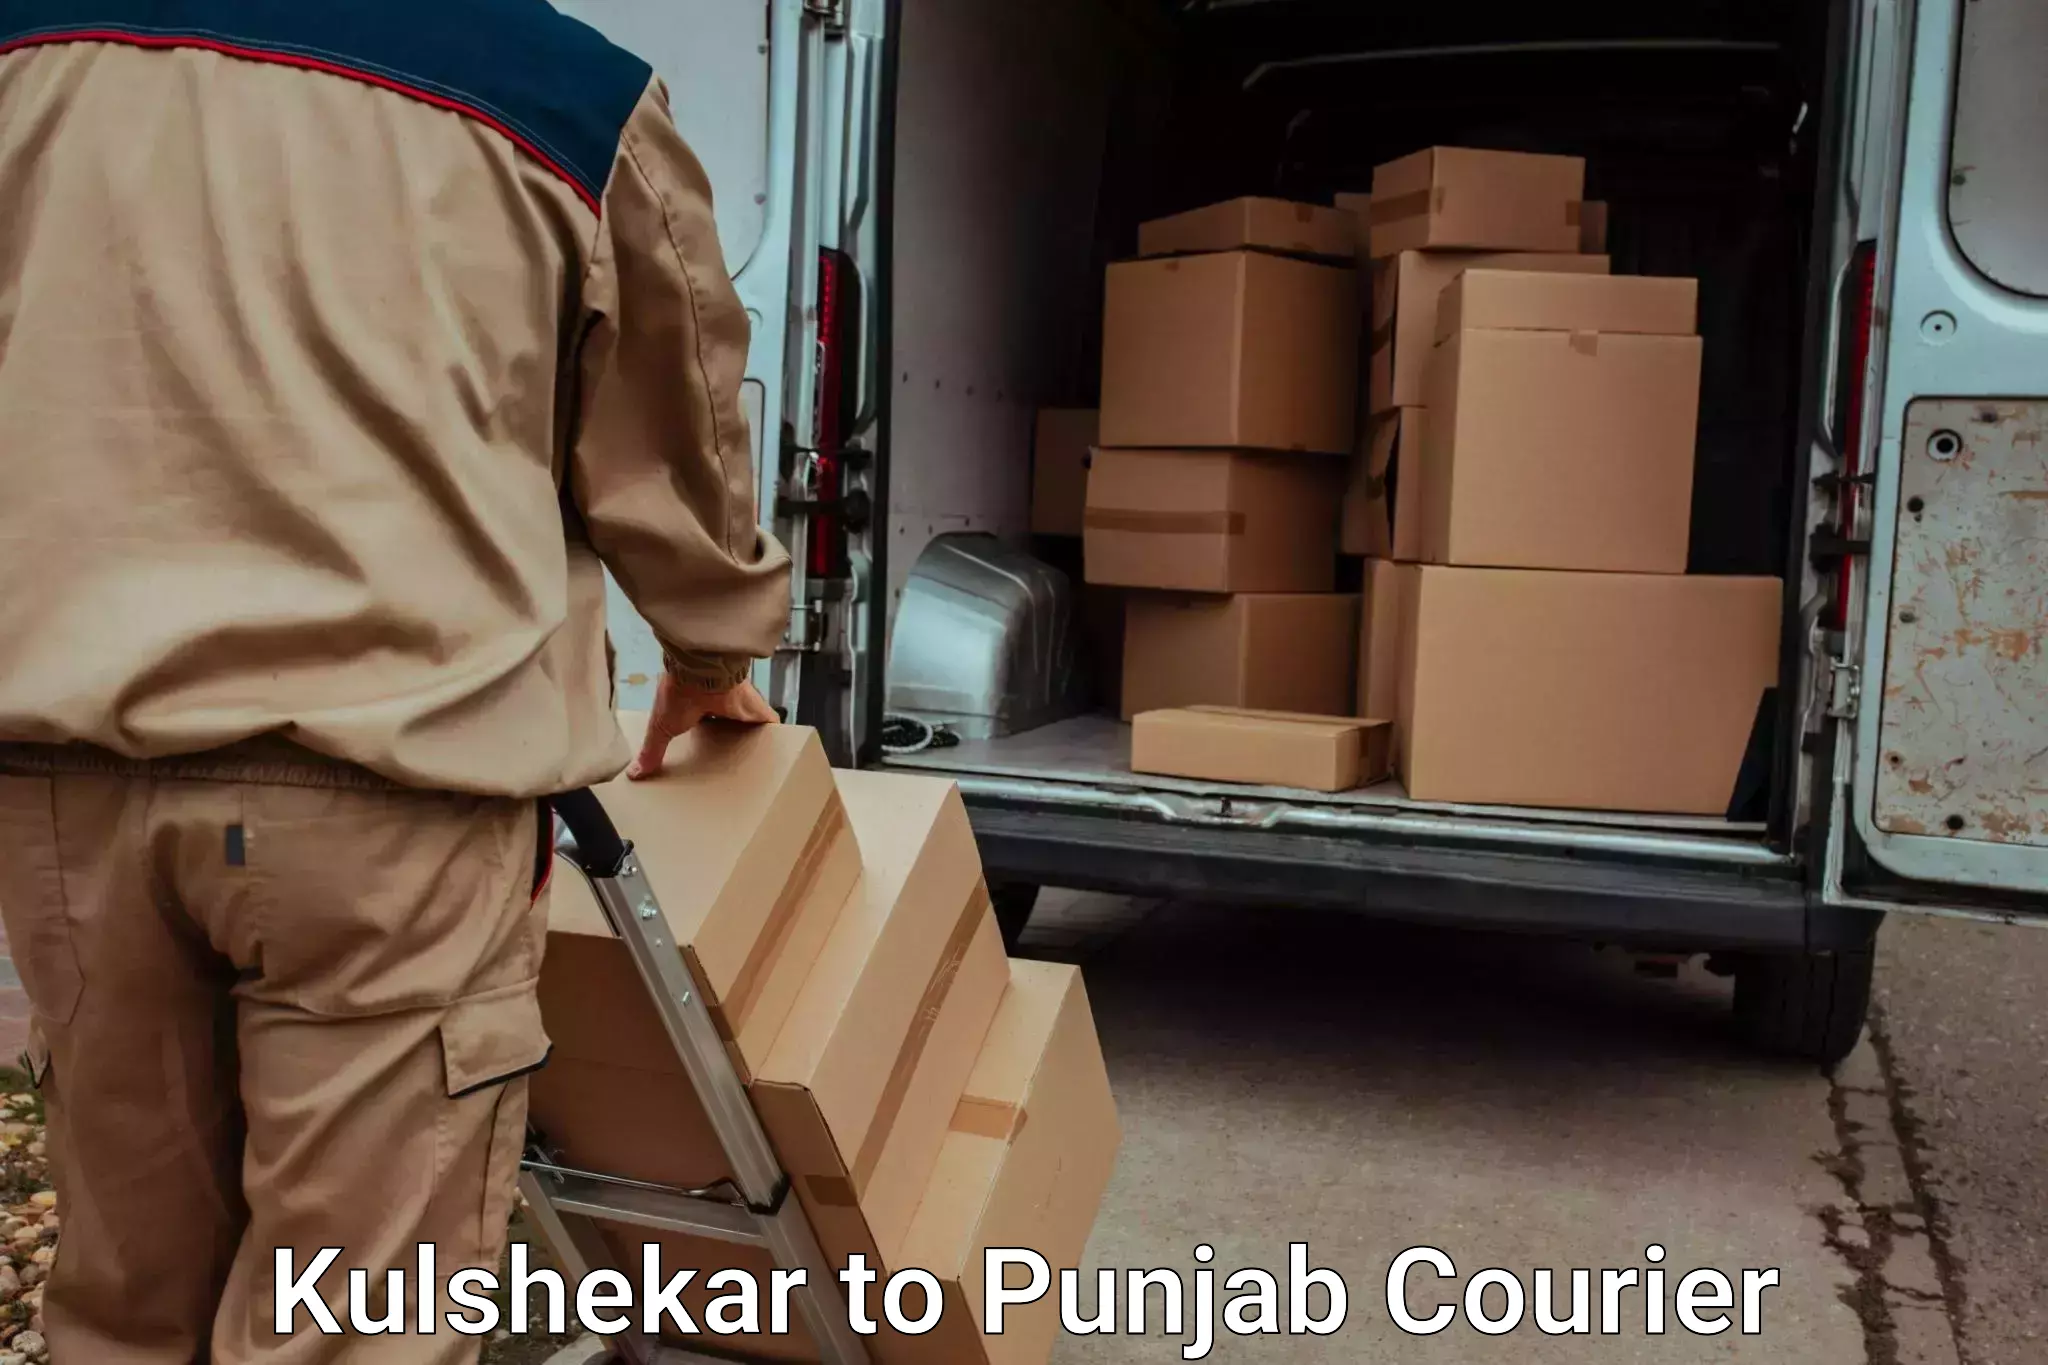 Efficient moving company Kulshekar to Talwara